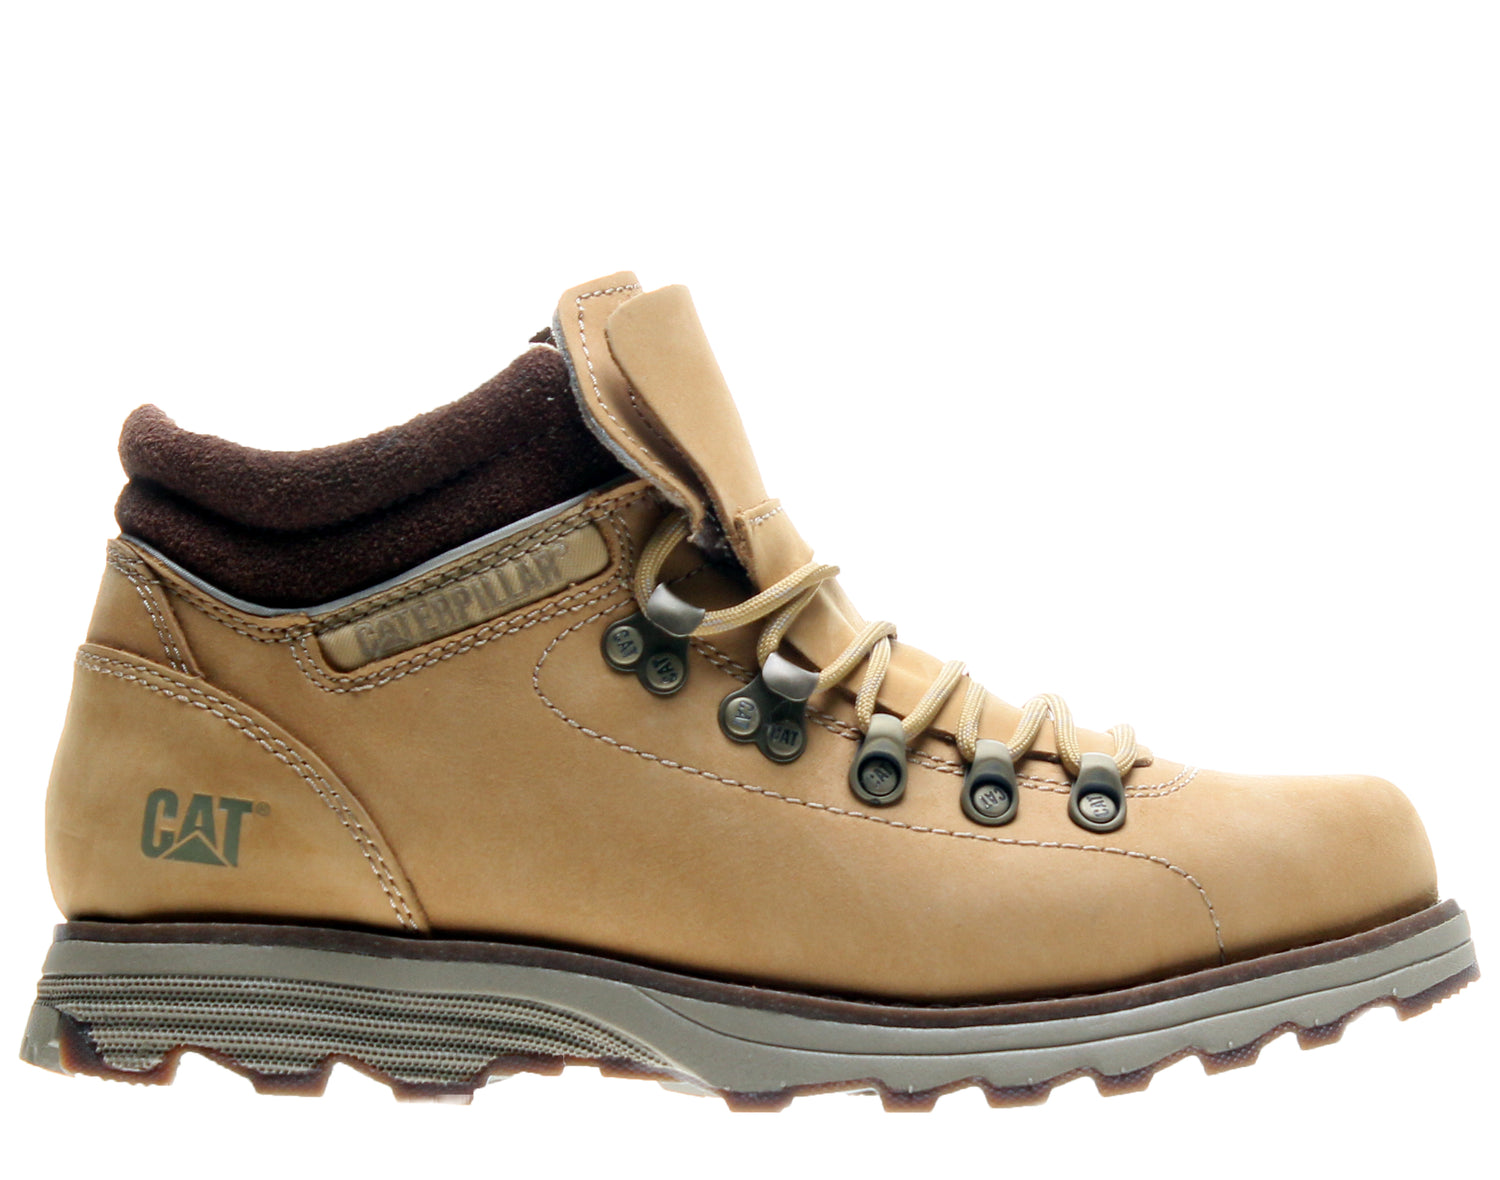 Caterpillar Peak Men's Hiking Boots